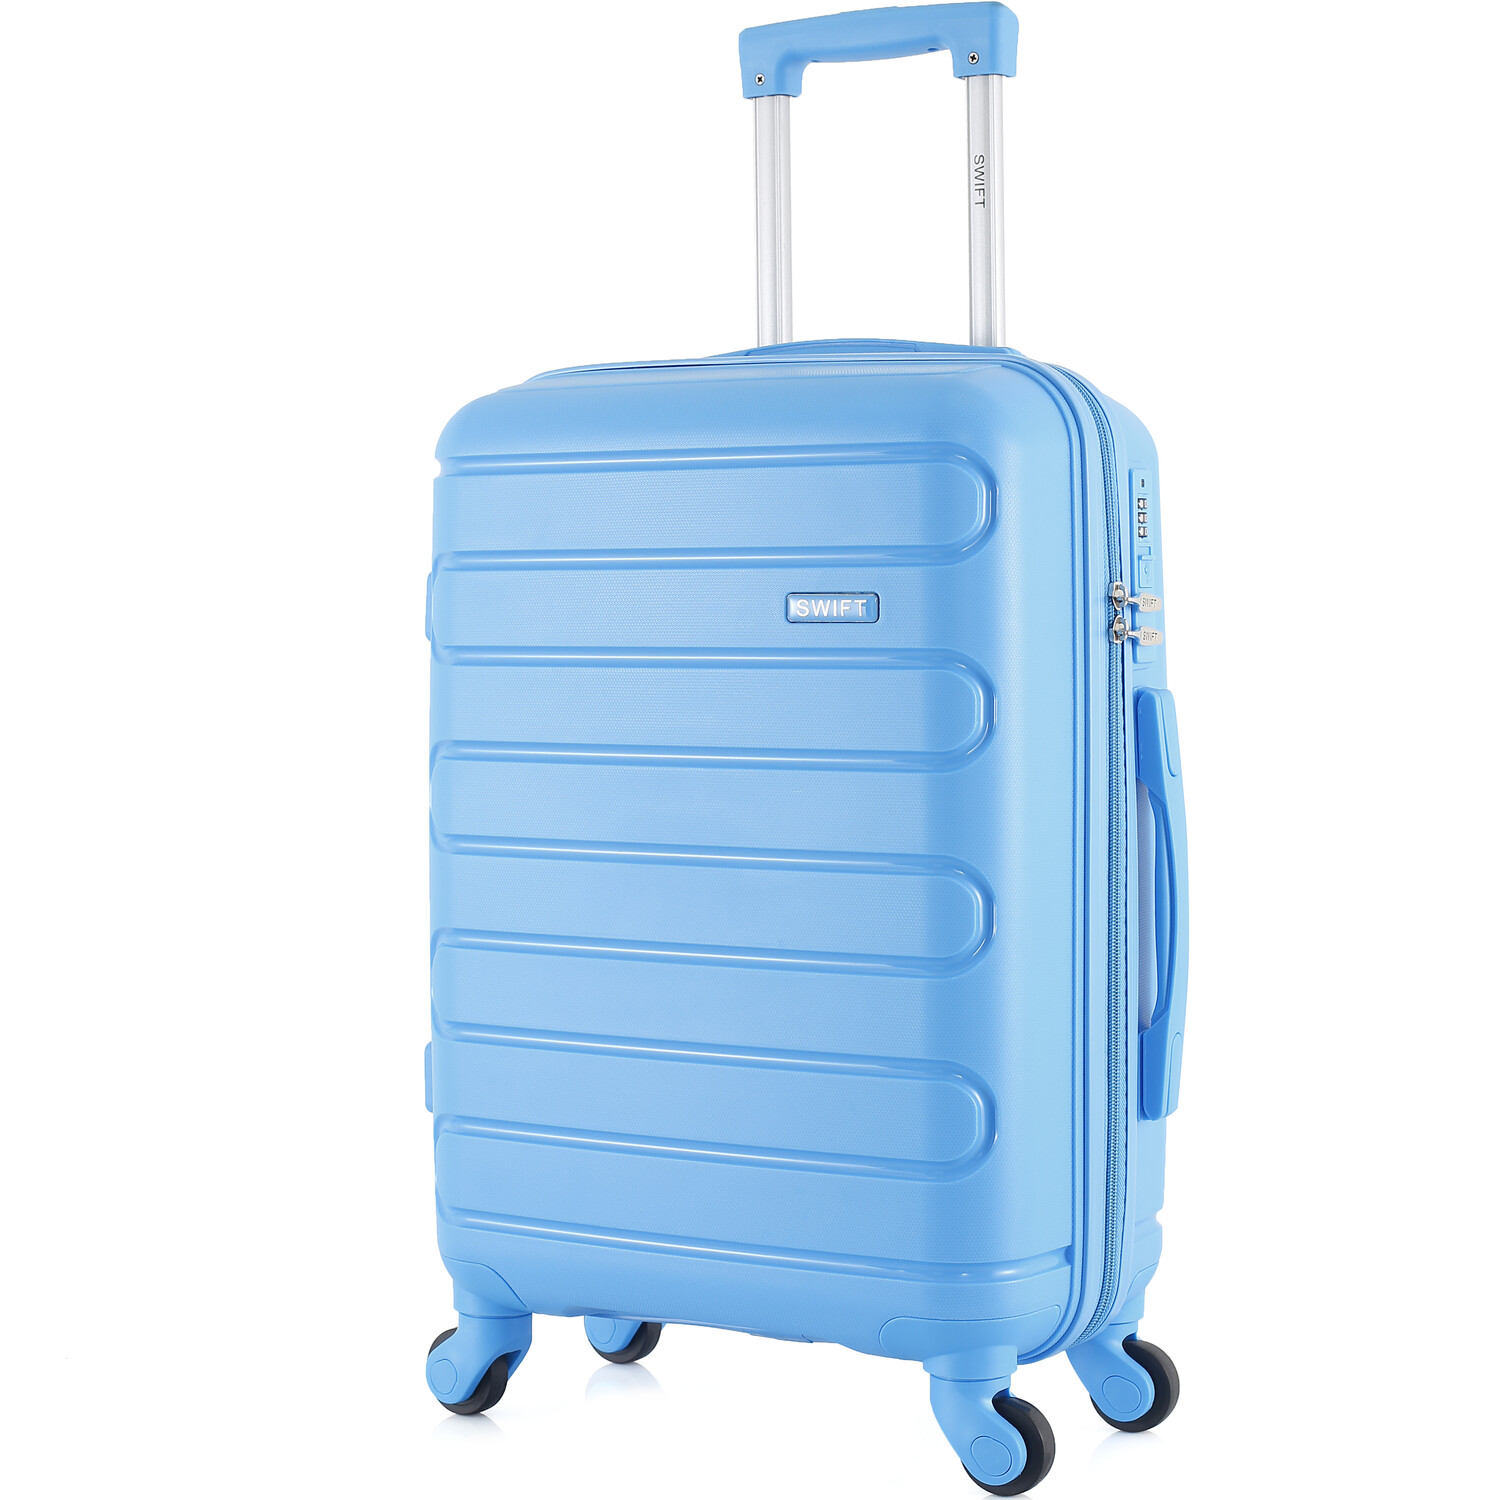 Swift Horizon Suitcase - Deep Teal / Cabin Case Image 2